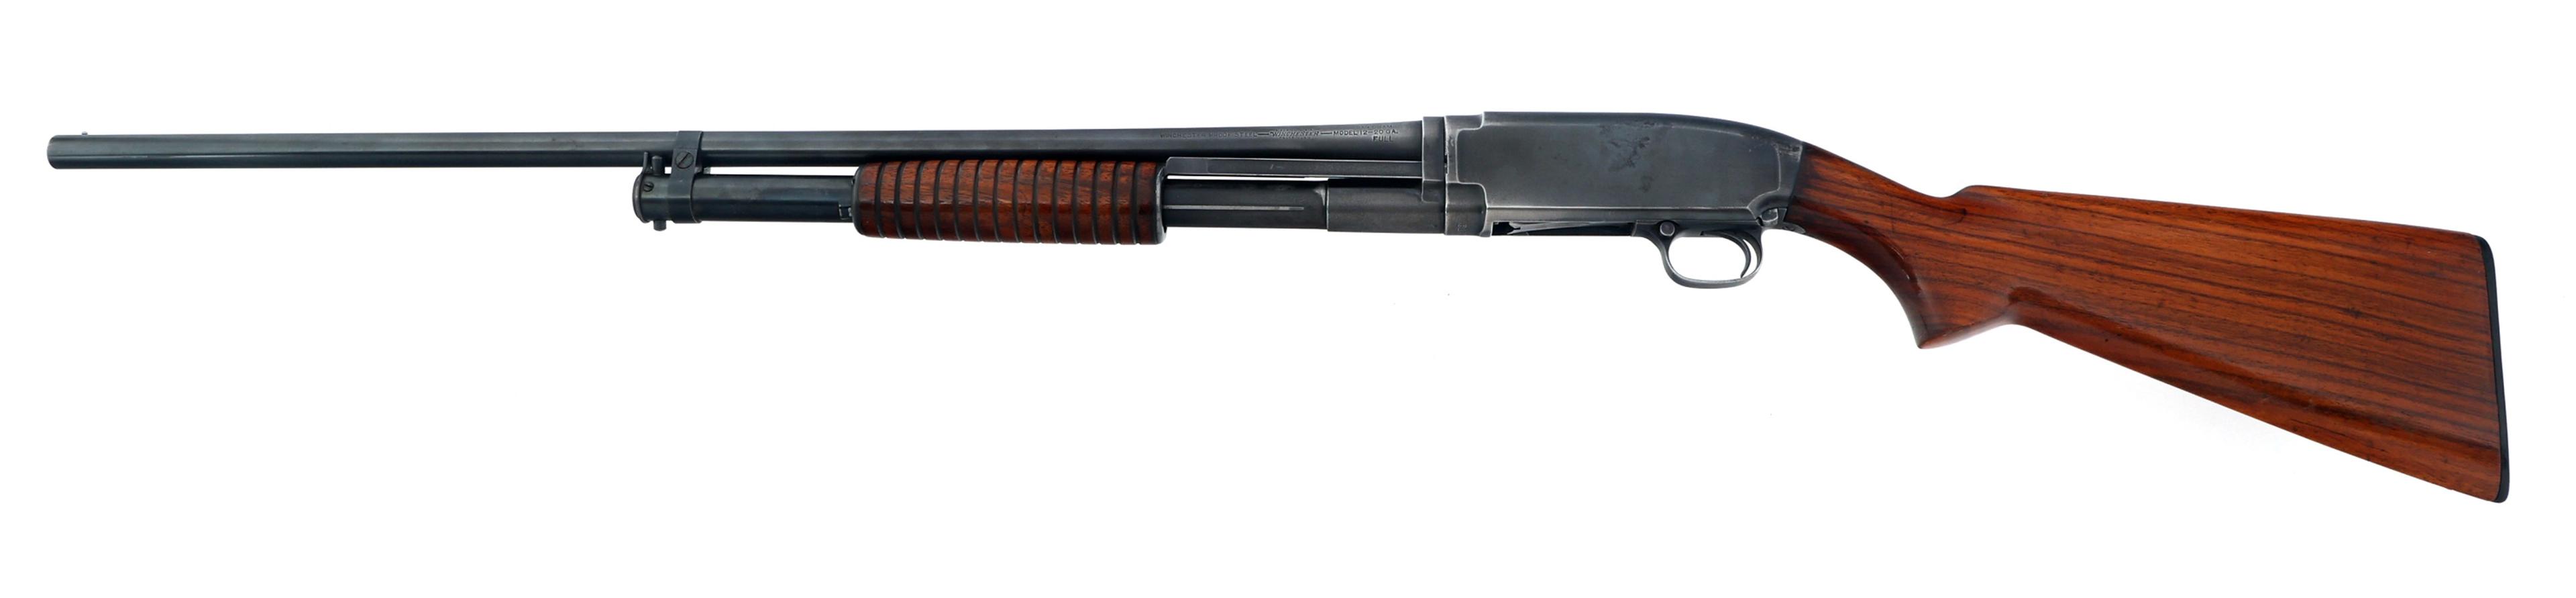 1937 WINCHESTER MODEL 12 20 GAUGE SHOTGUN